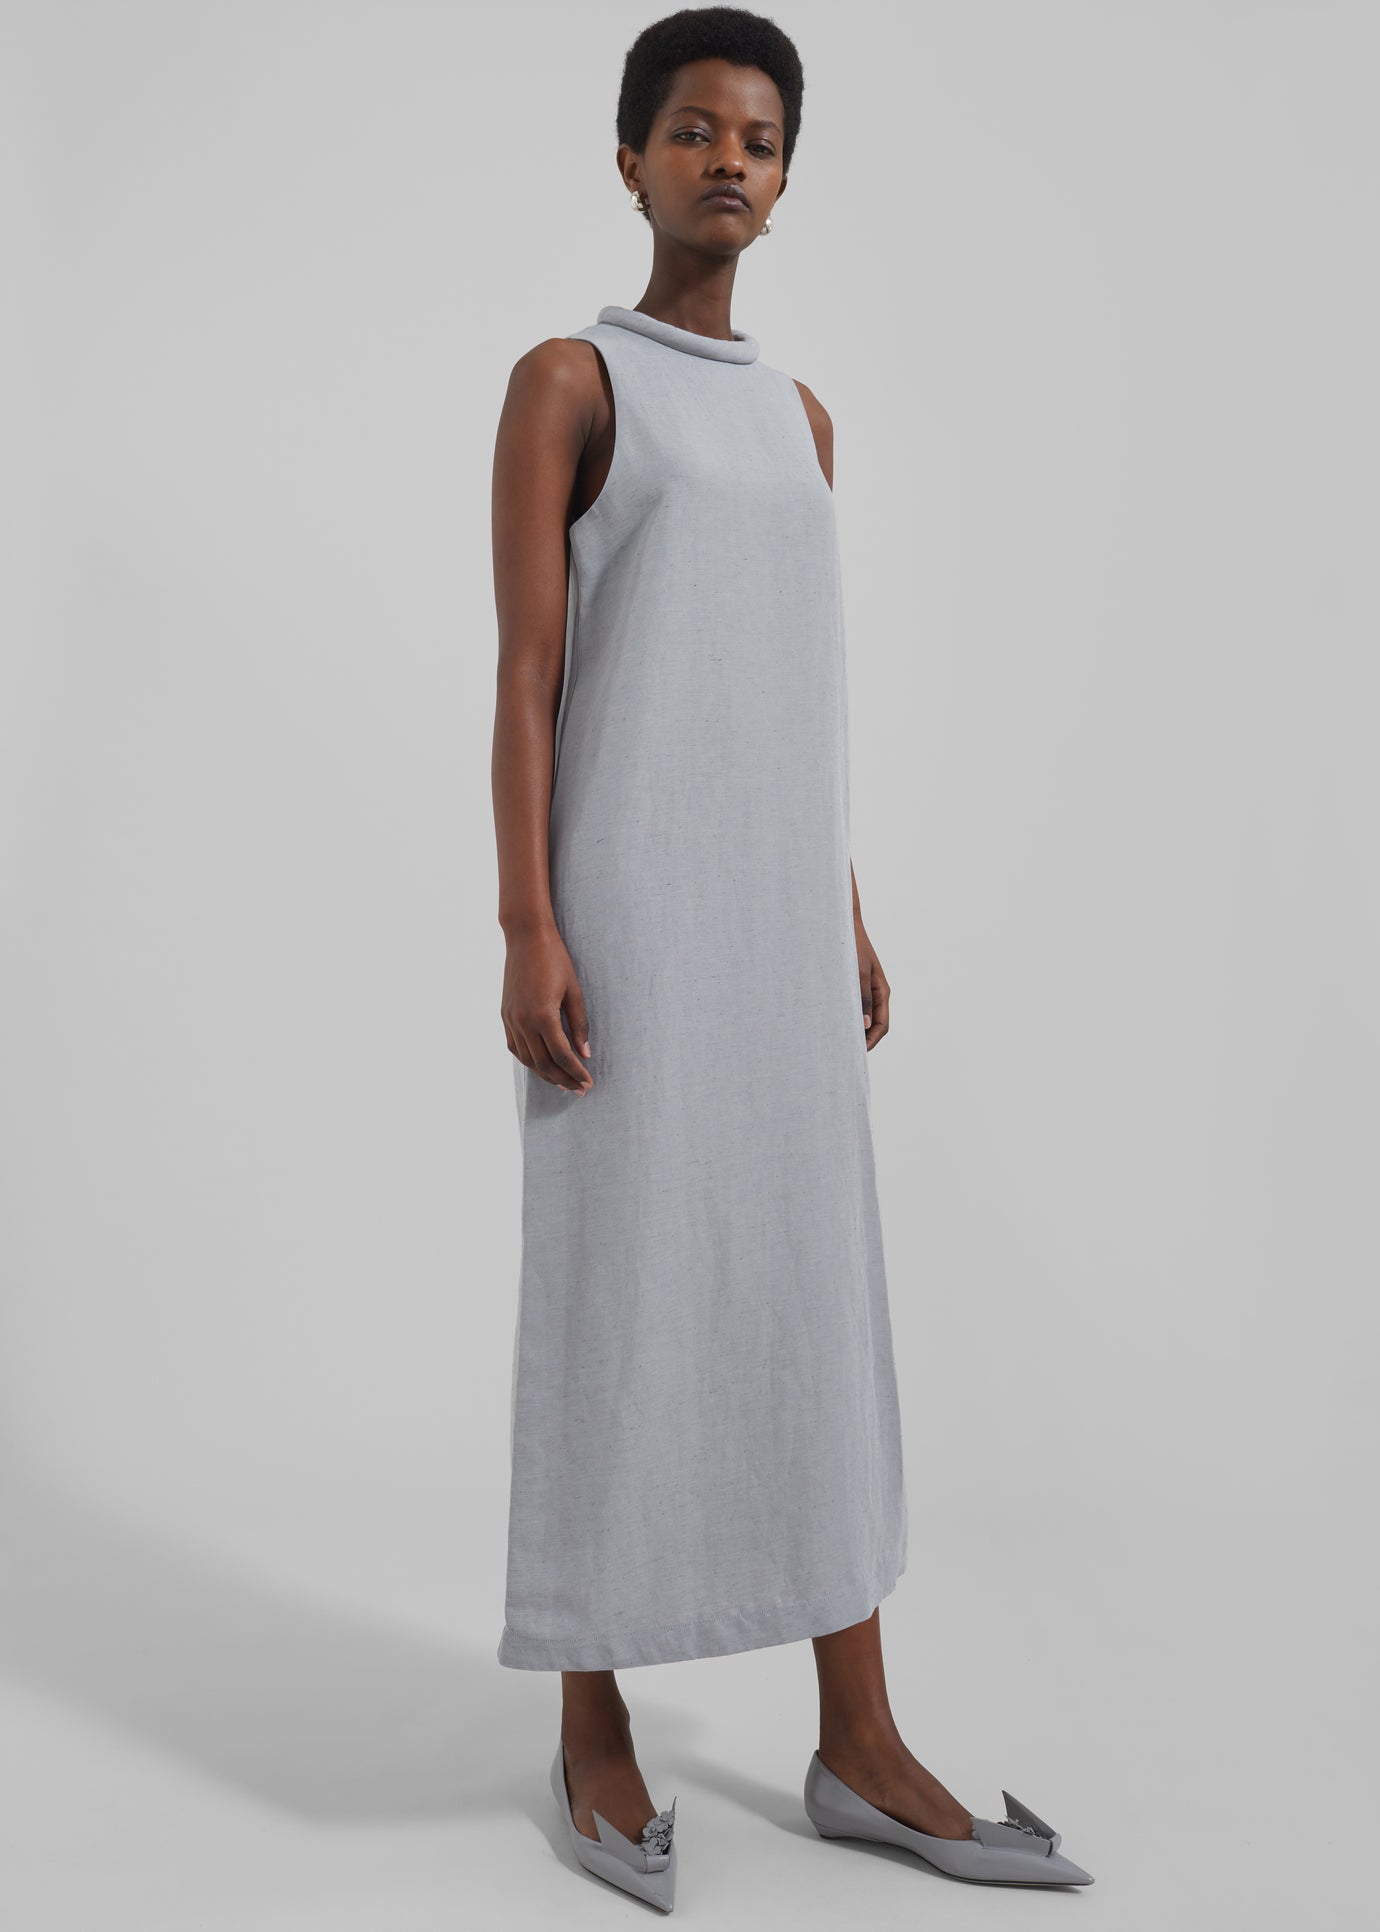 Loulou Studio Rivida Mixed Linen Dress - Pearl Grey Melange